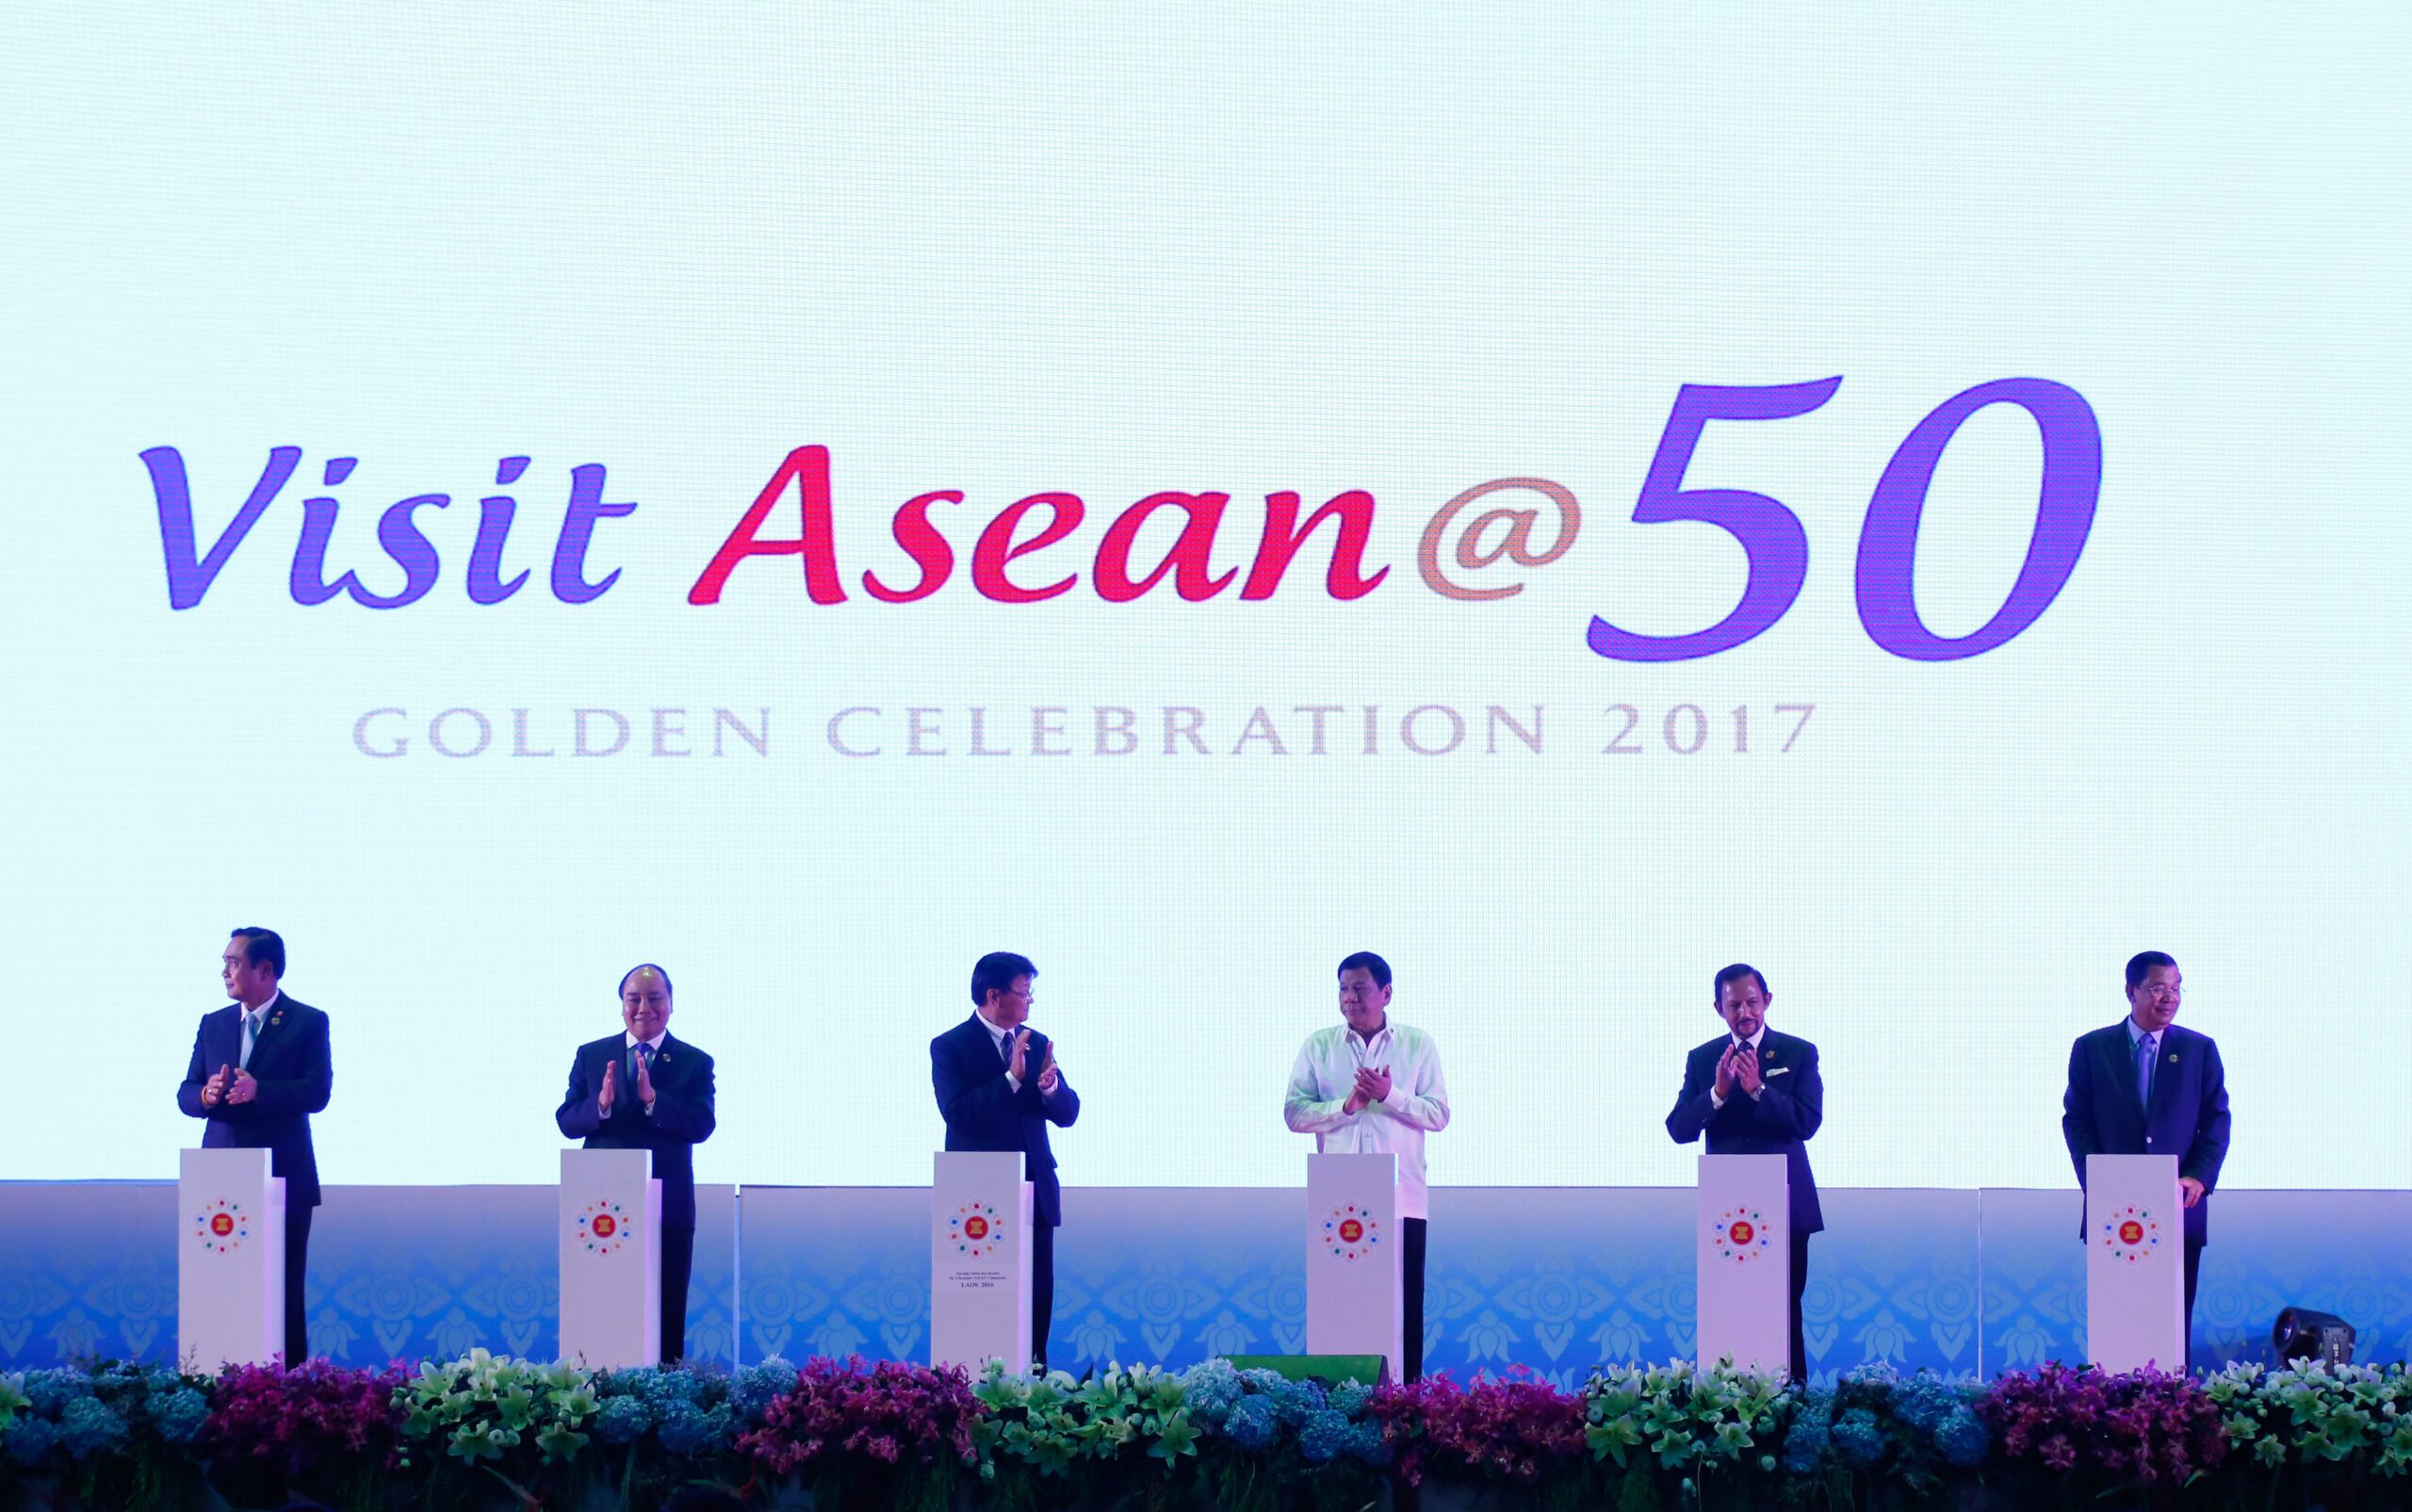 Schedule of activities: ASEAN 2017 Summit from April 26-29